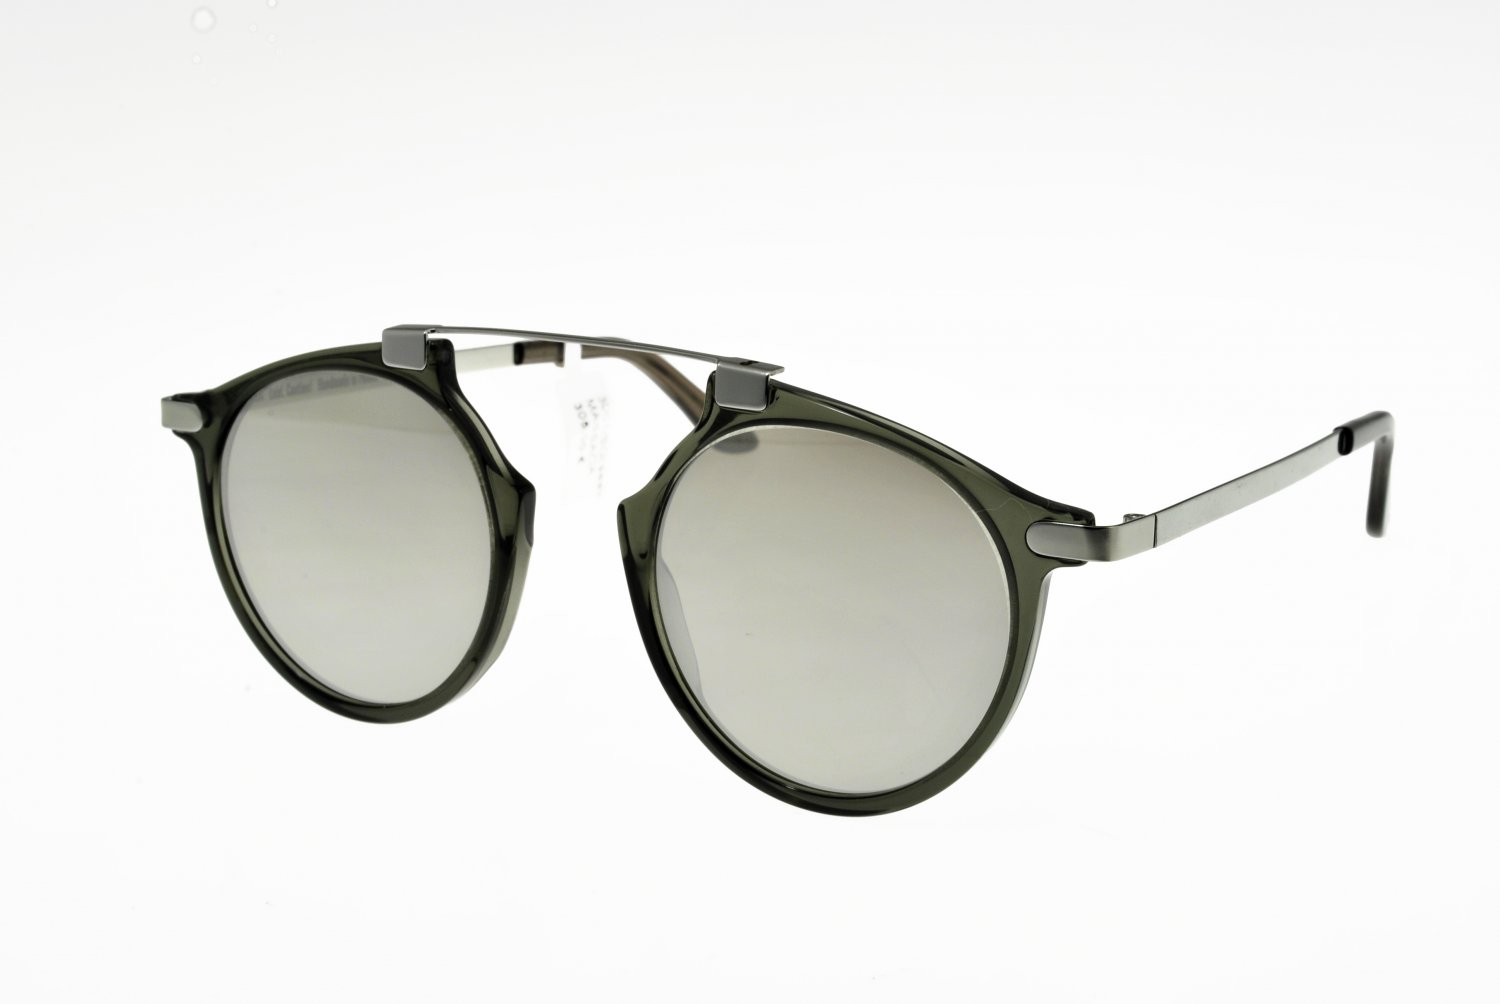 Sunglasses Massada Lust Caution! 3001 SG (seaweed green) Grey Round Silver